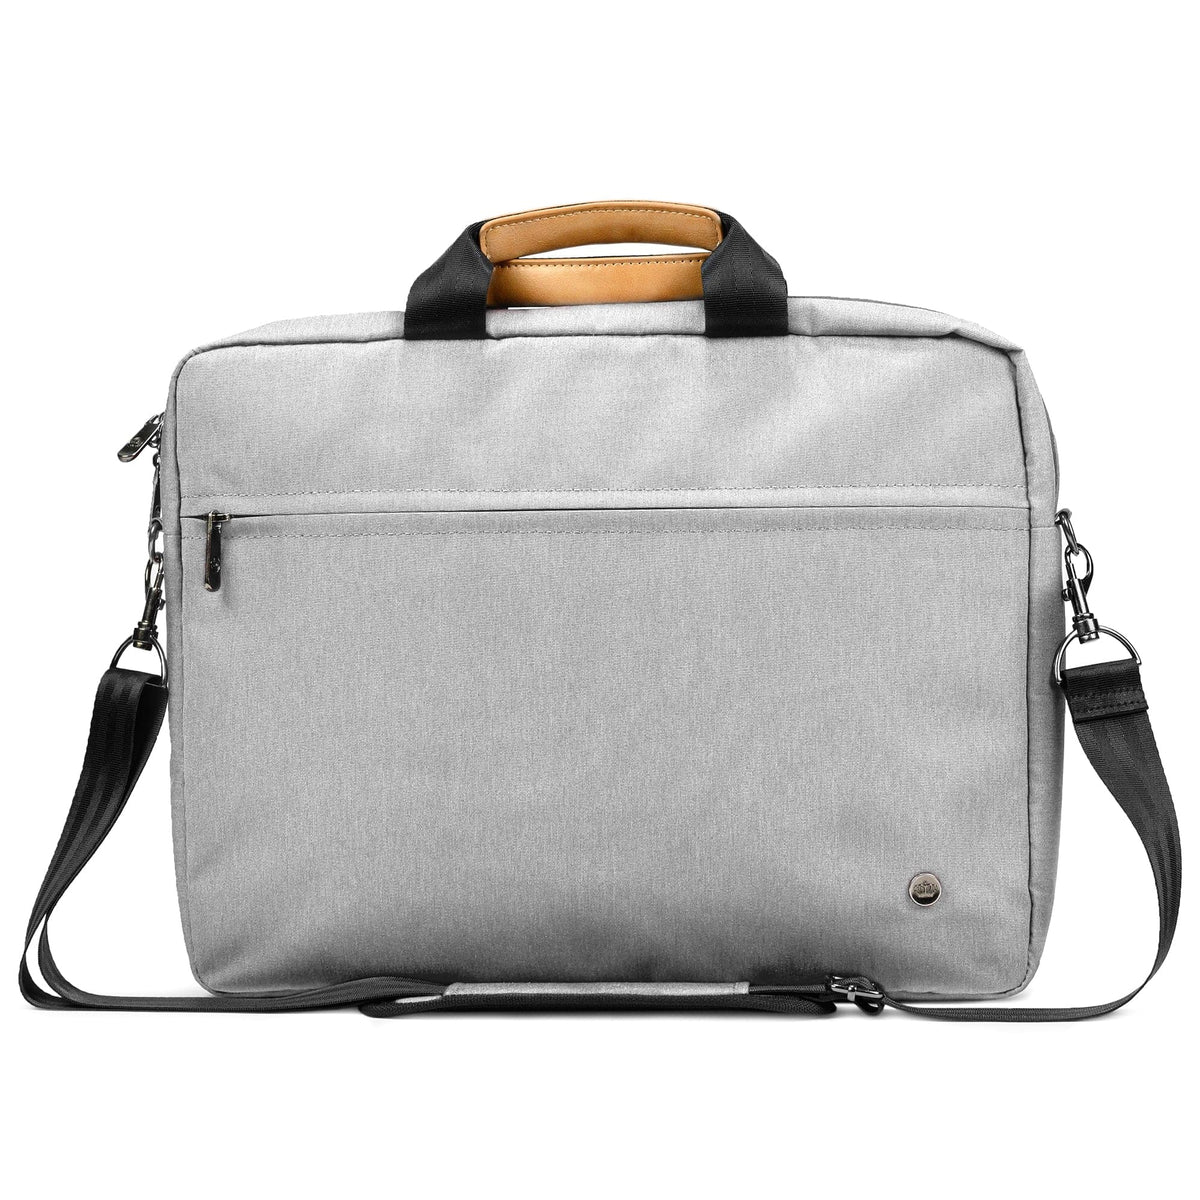 PKG Spadina 15" Laptop Messenger Bag